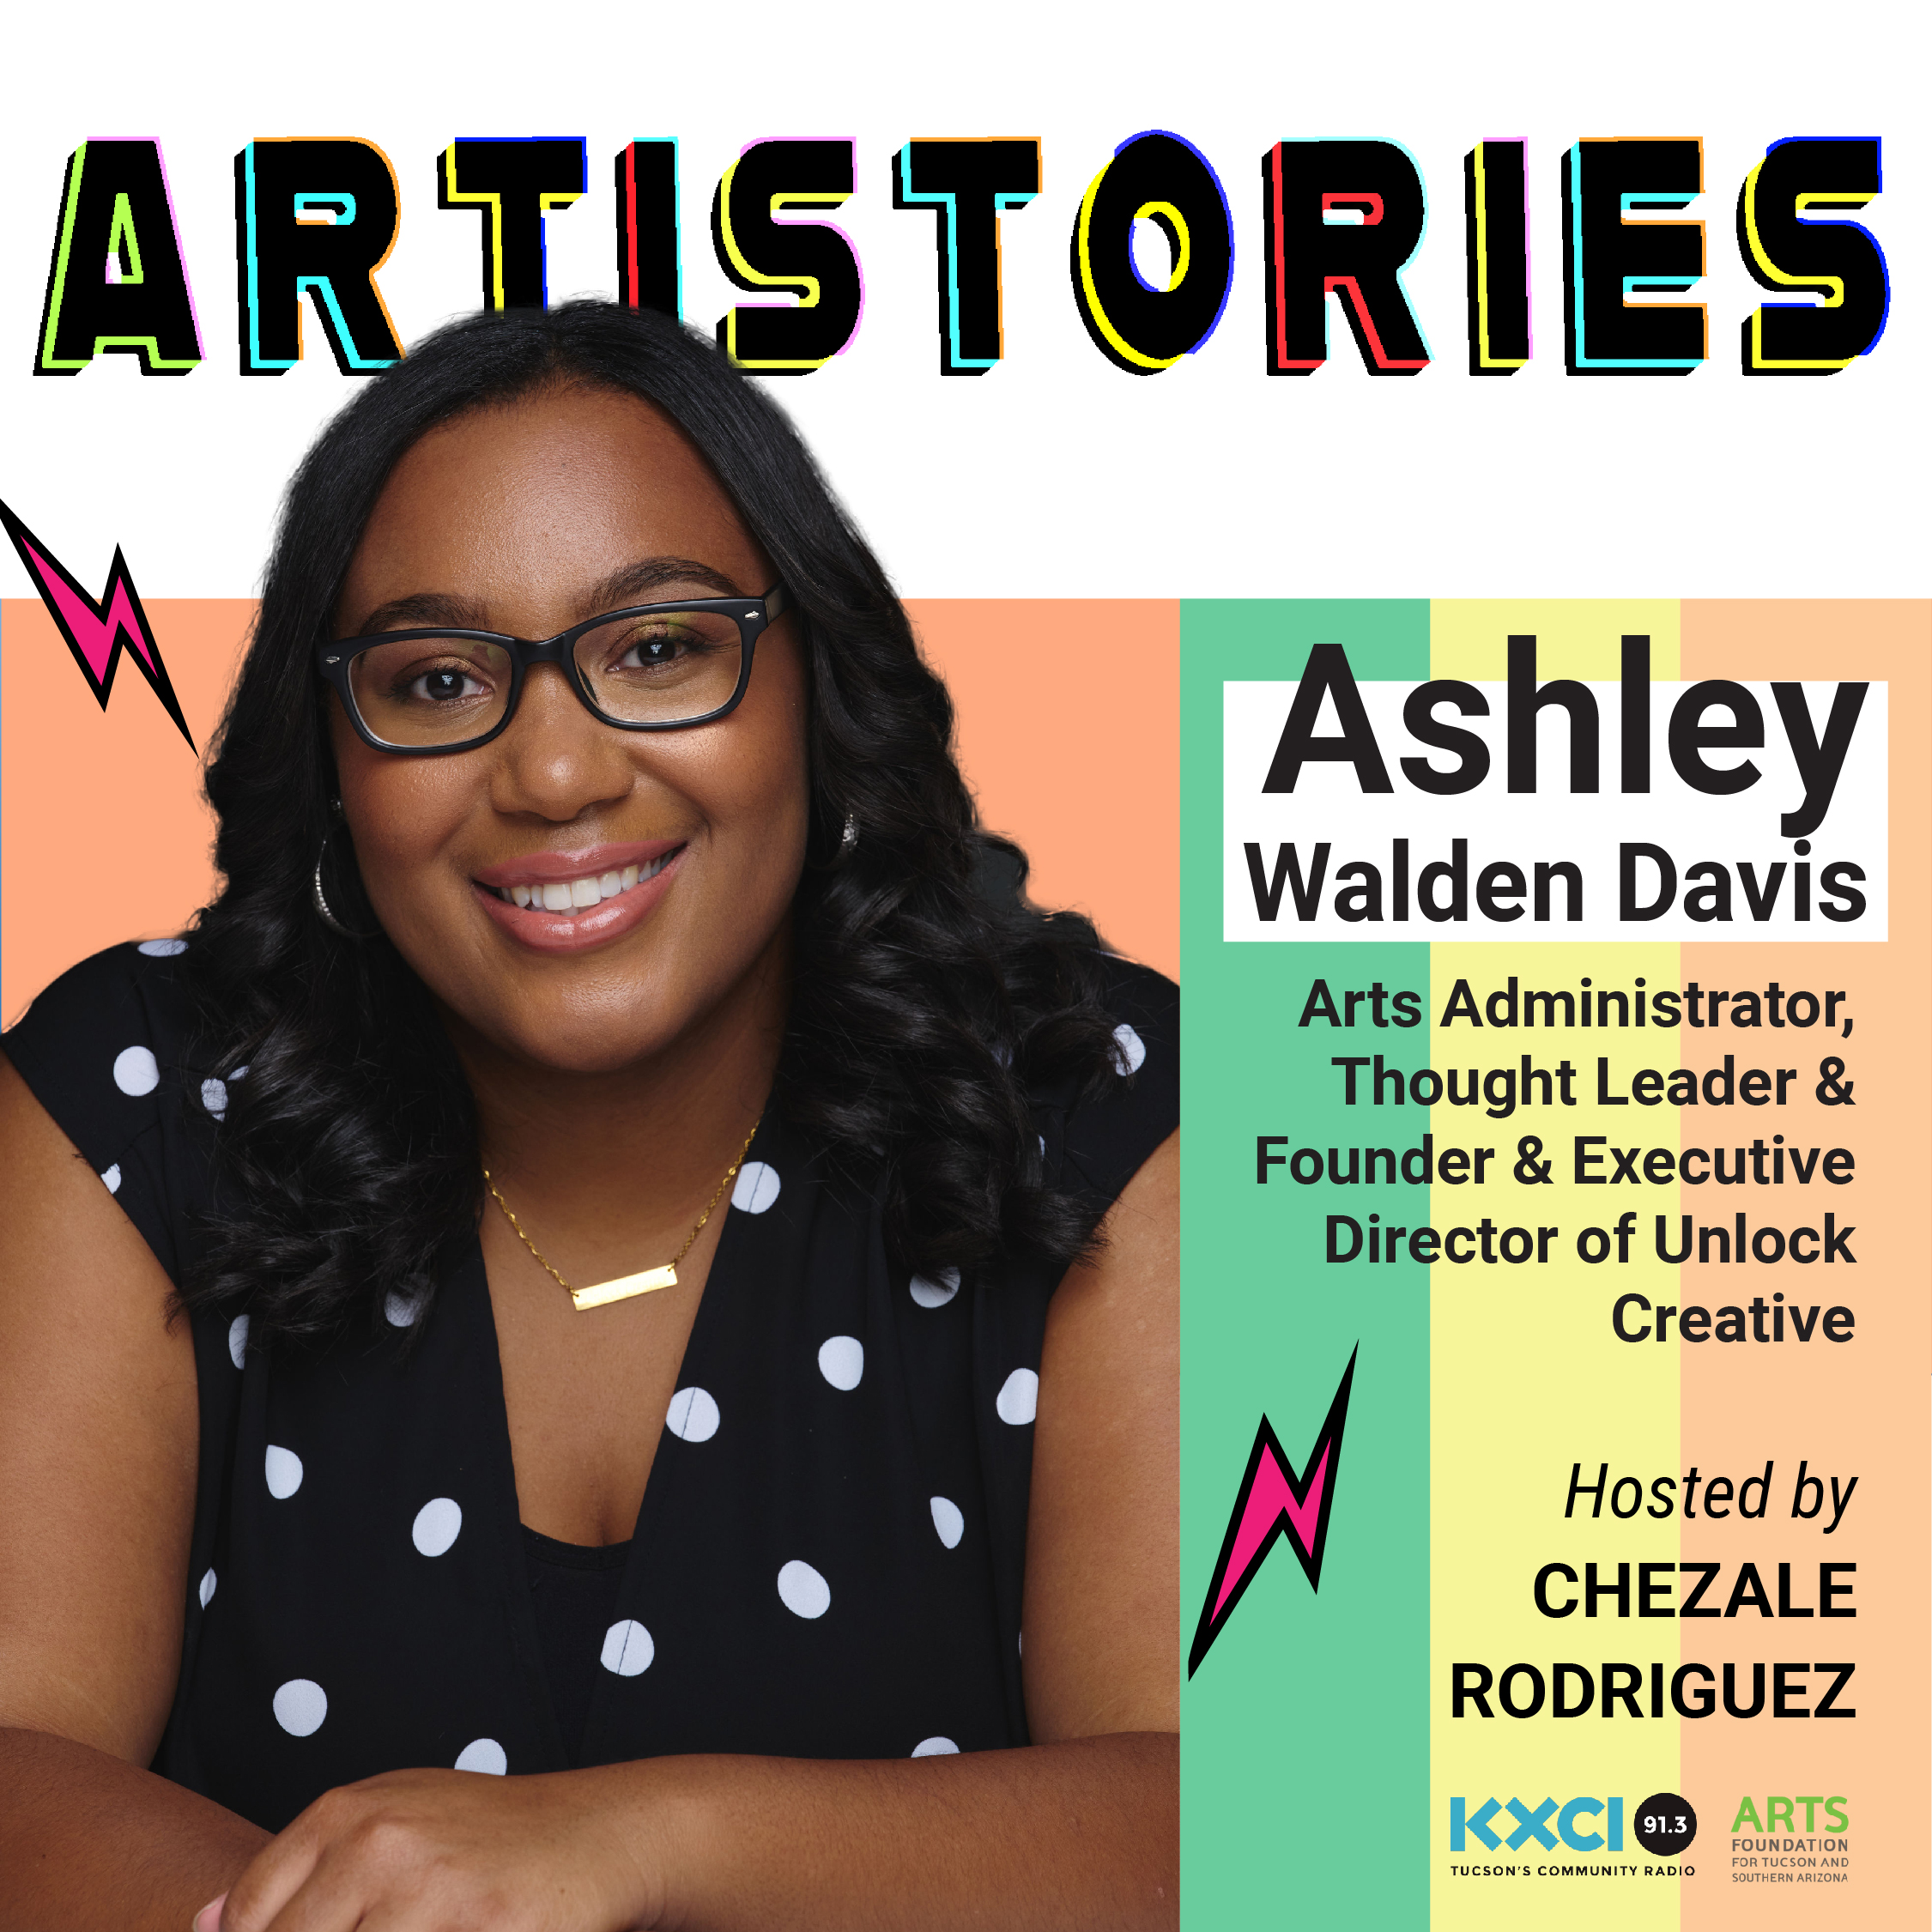 Ashley Walden Davis - Arts Administrator, and Founder & Executive Director of Unlock Creative